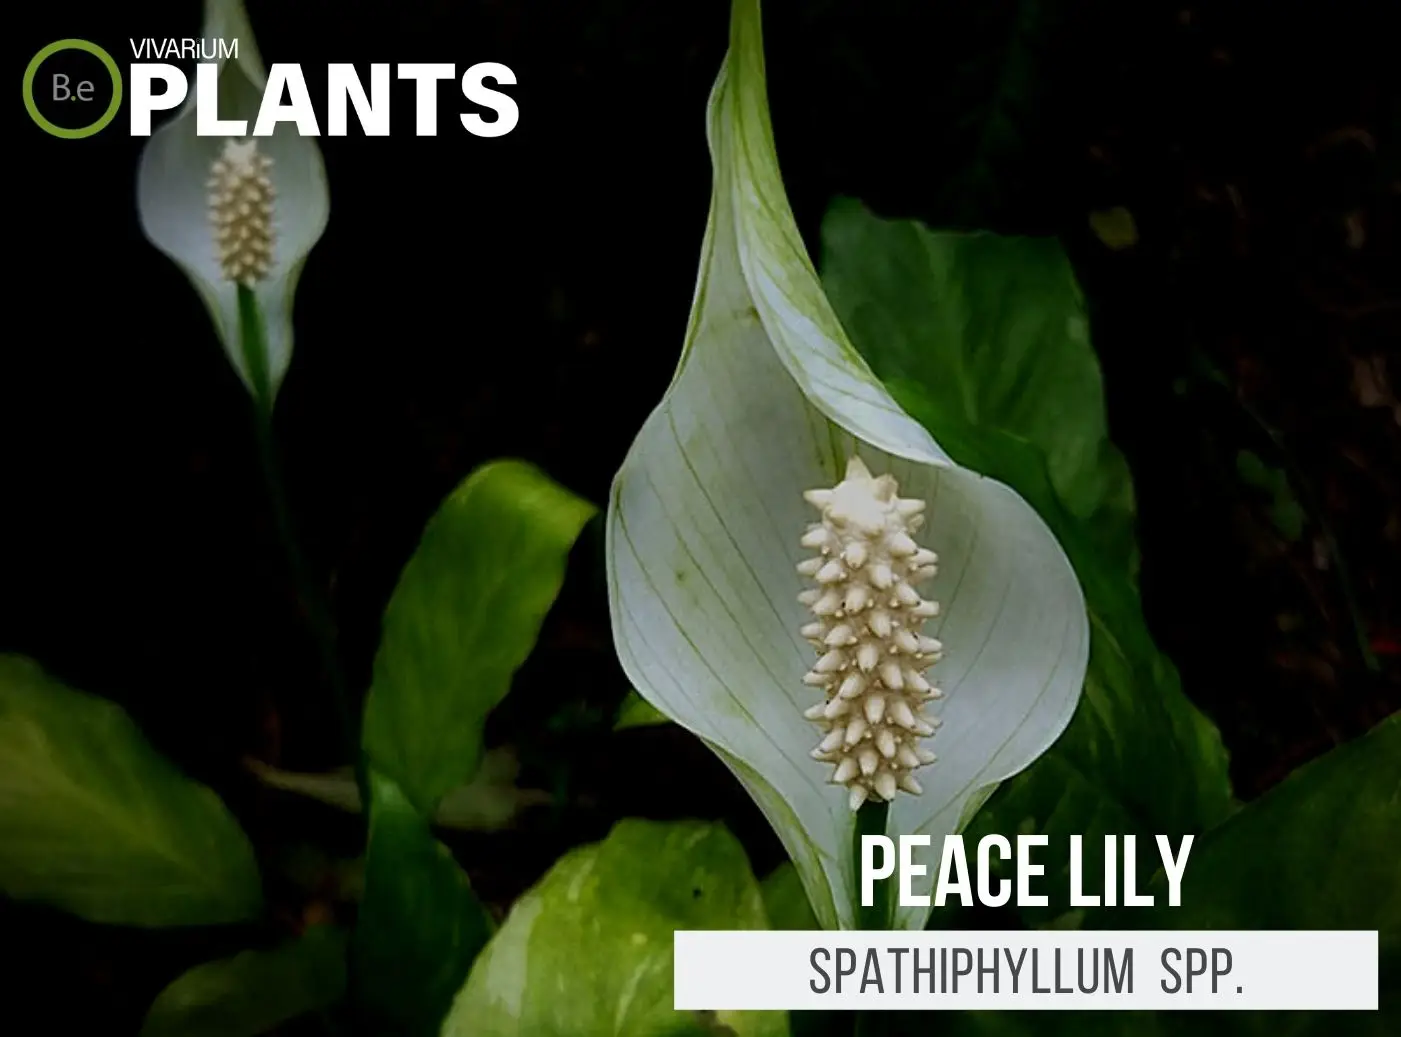 Spathiphyllum "Peace Lily" Care Guide | Tropical Terrarium Plants